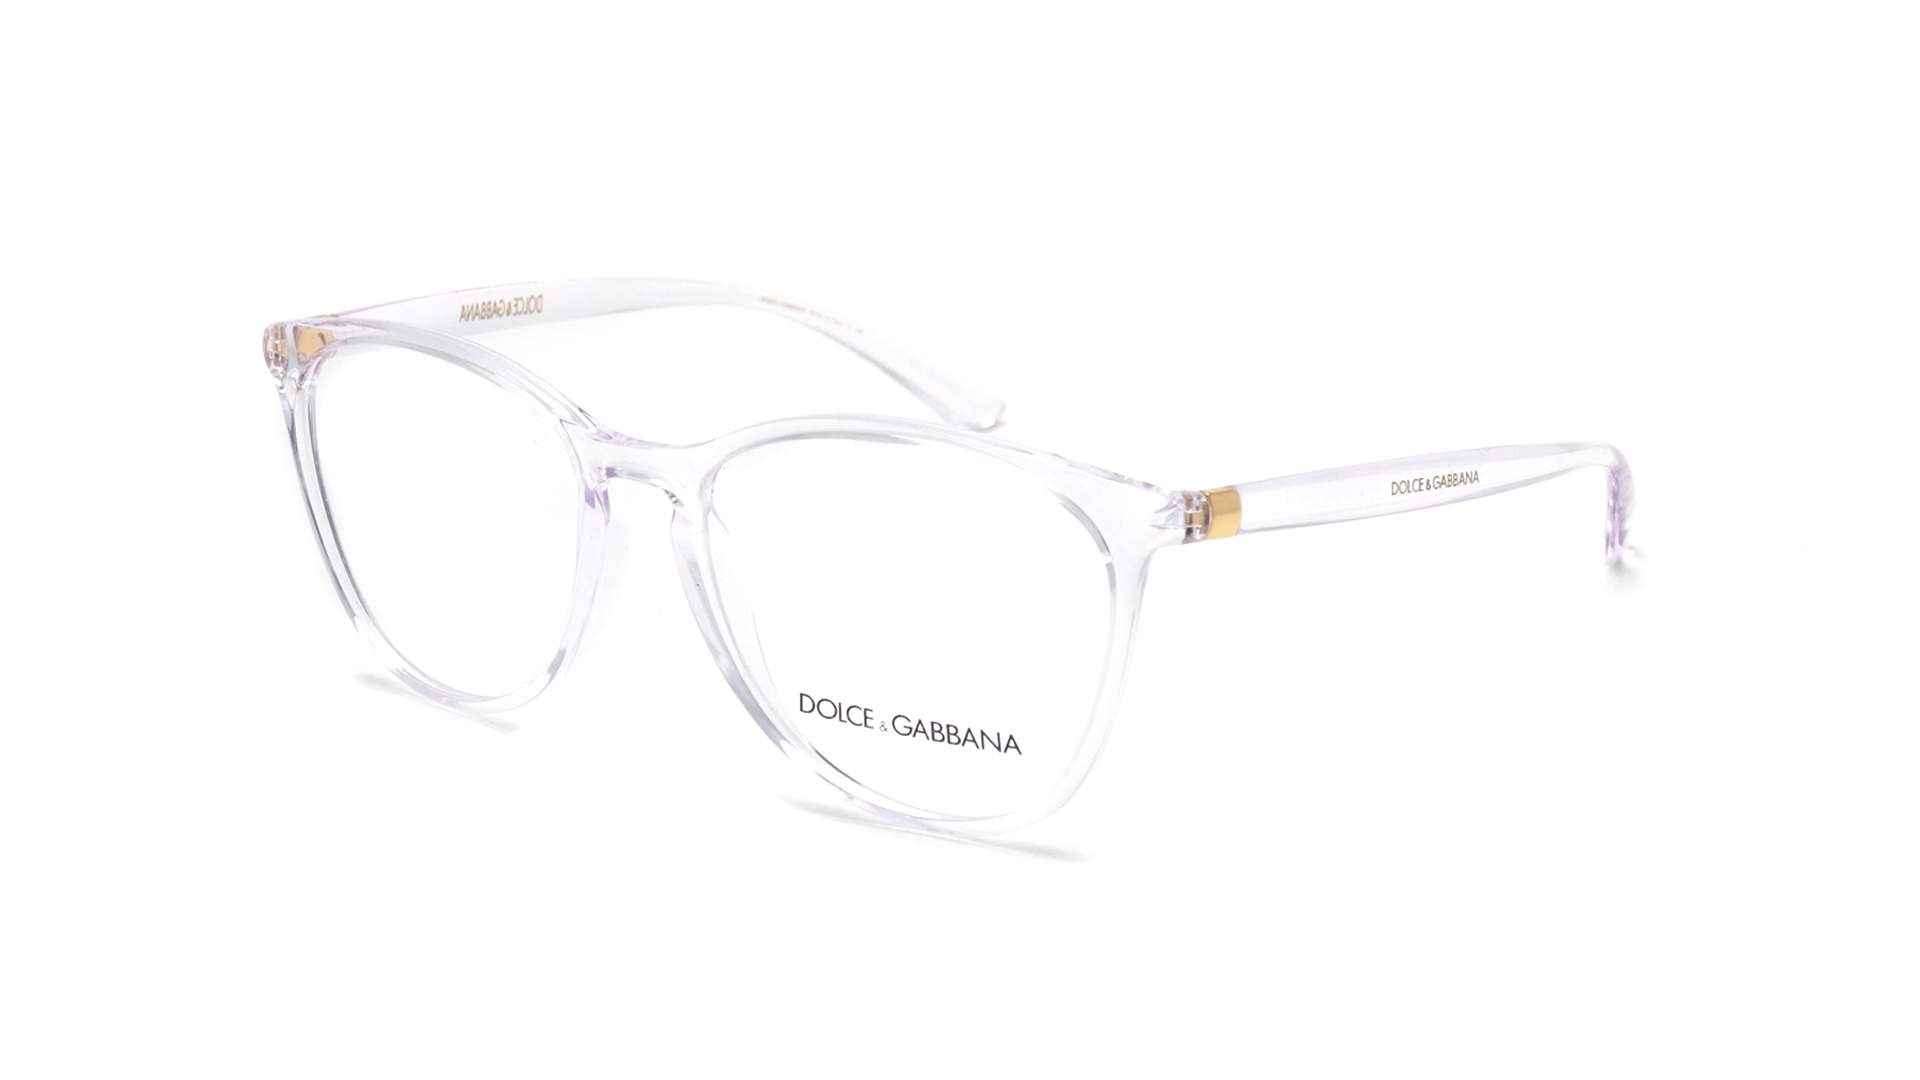 dolce gabbana clear glasses